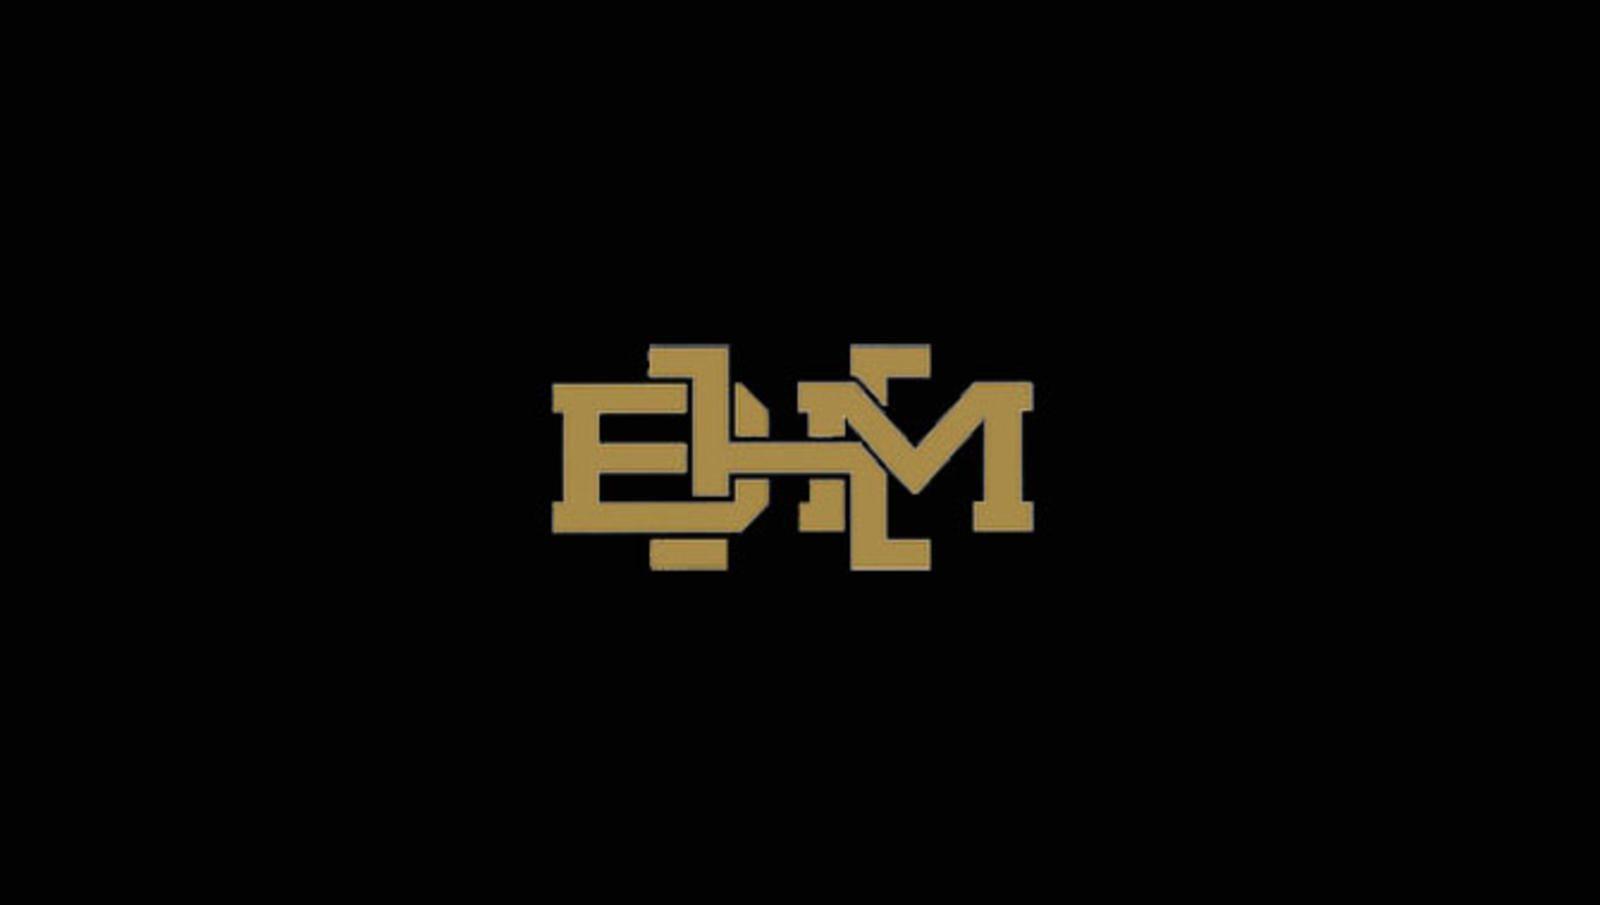 BHM Logo - NIKE, Inc.'s 10-Year Commitment to Black History Month - Nike News